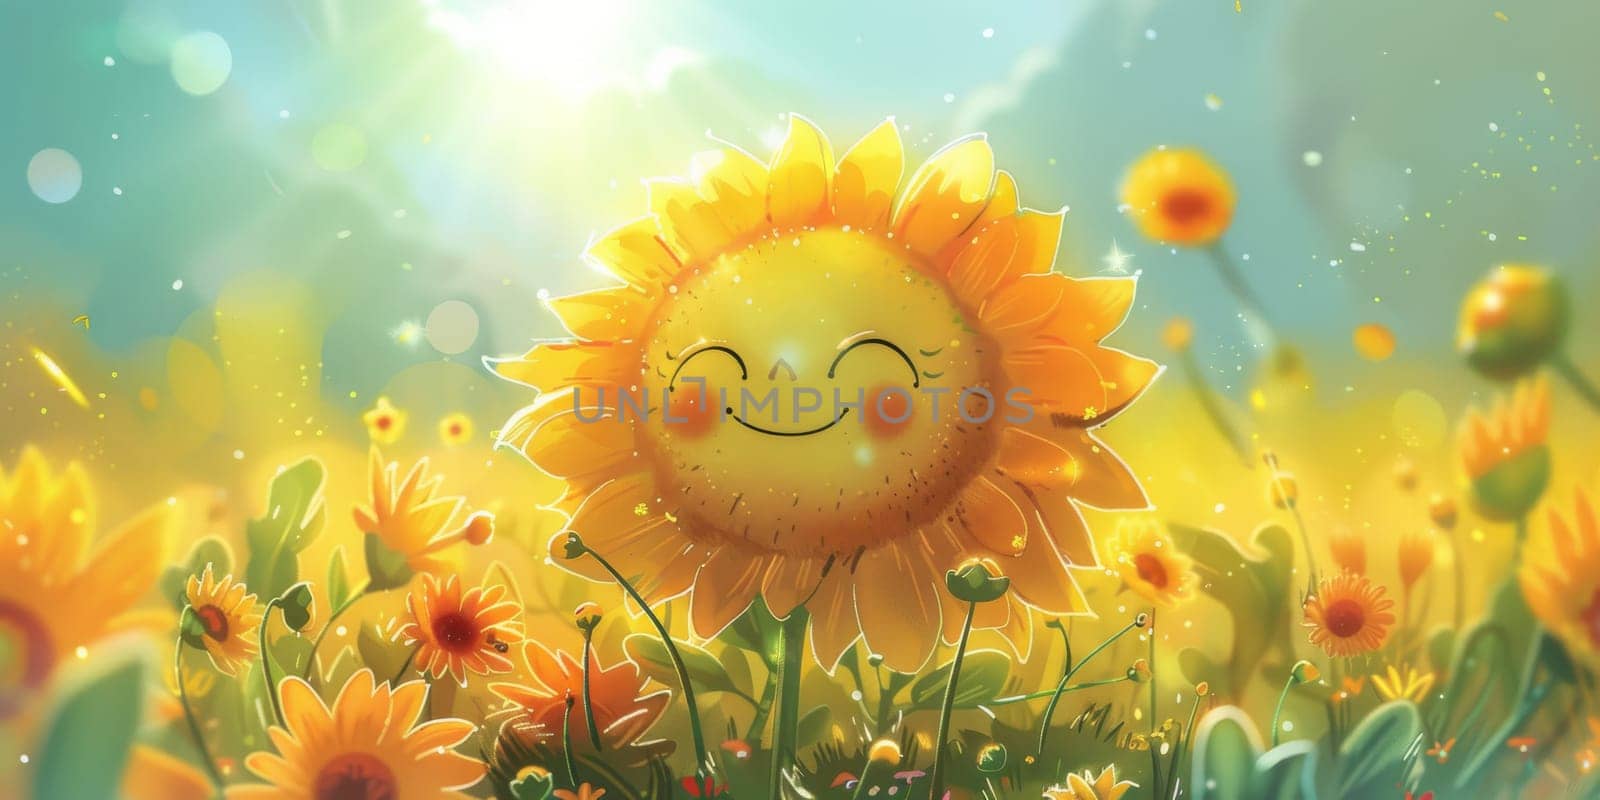 Cartoon smiling sunflower enjoying a sunny day